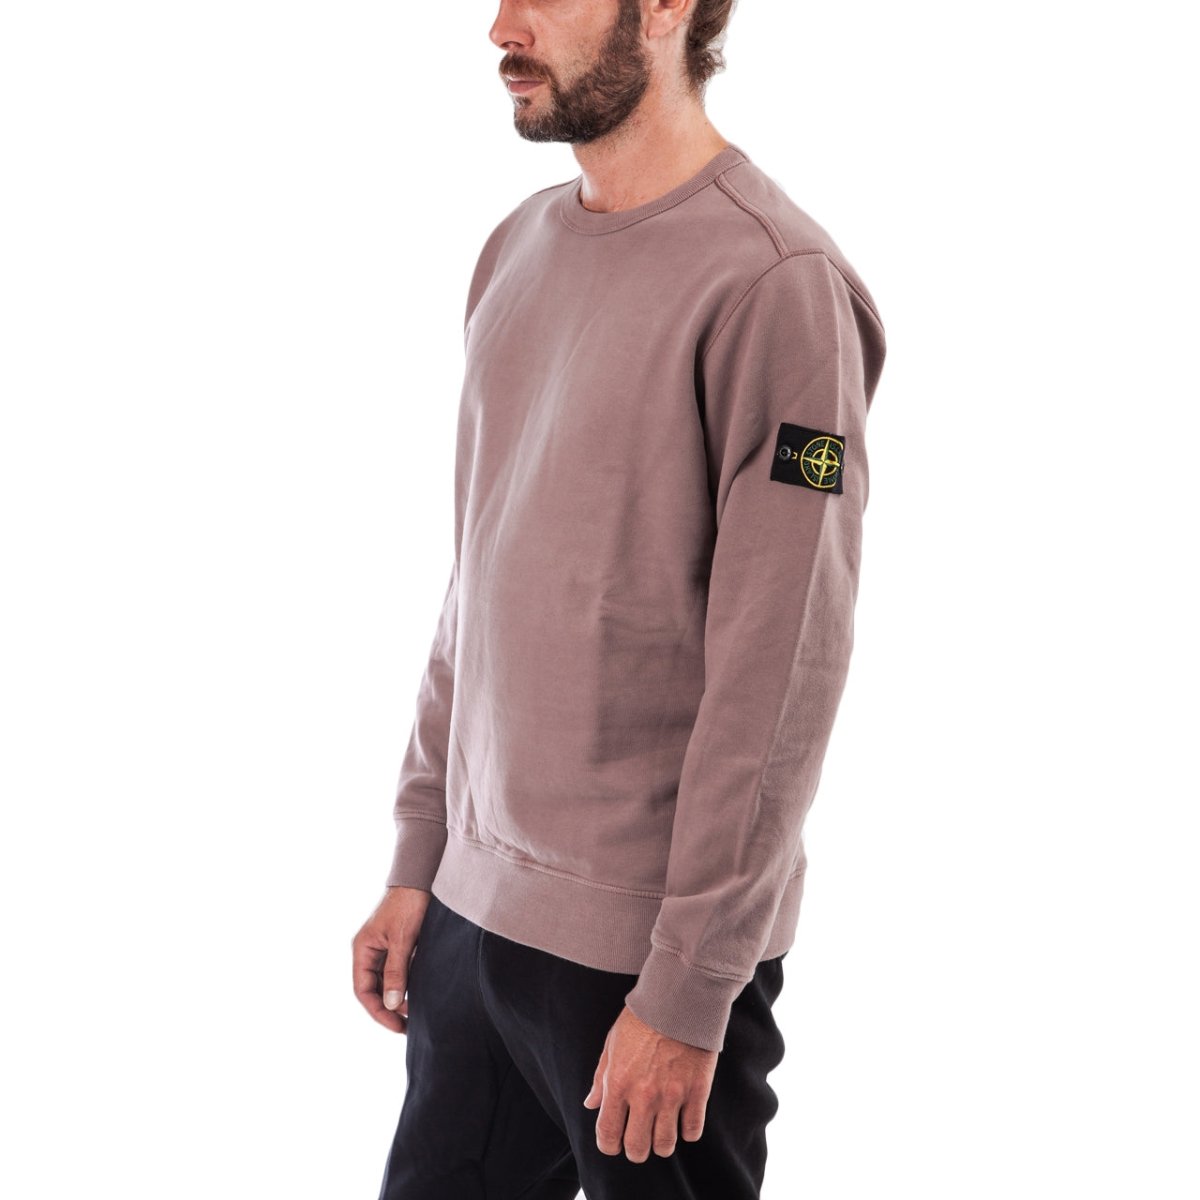 Stone Island Sweat Shirt (Dunkelrosa)  - Allike Store